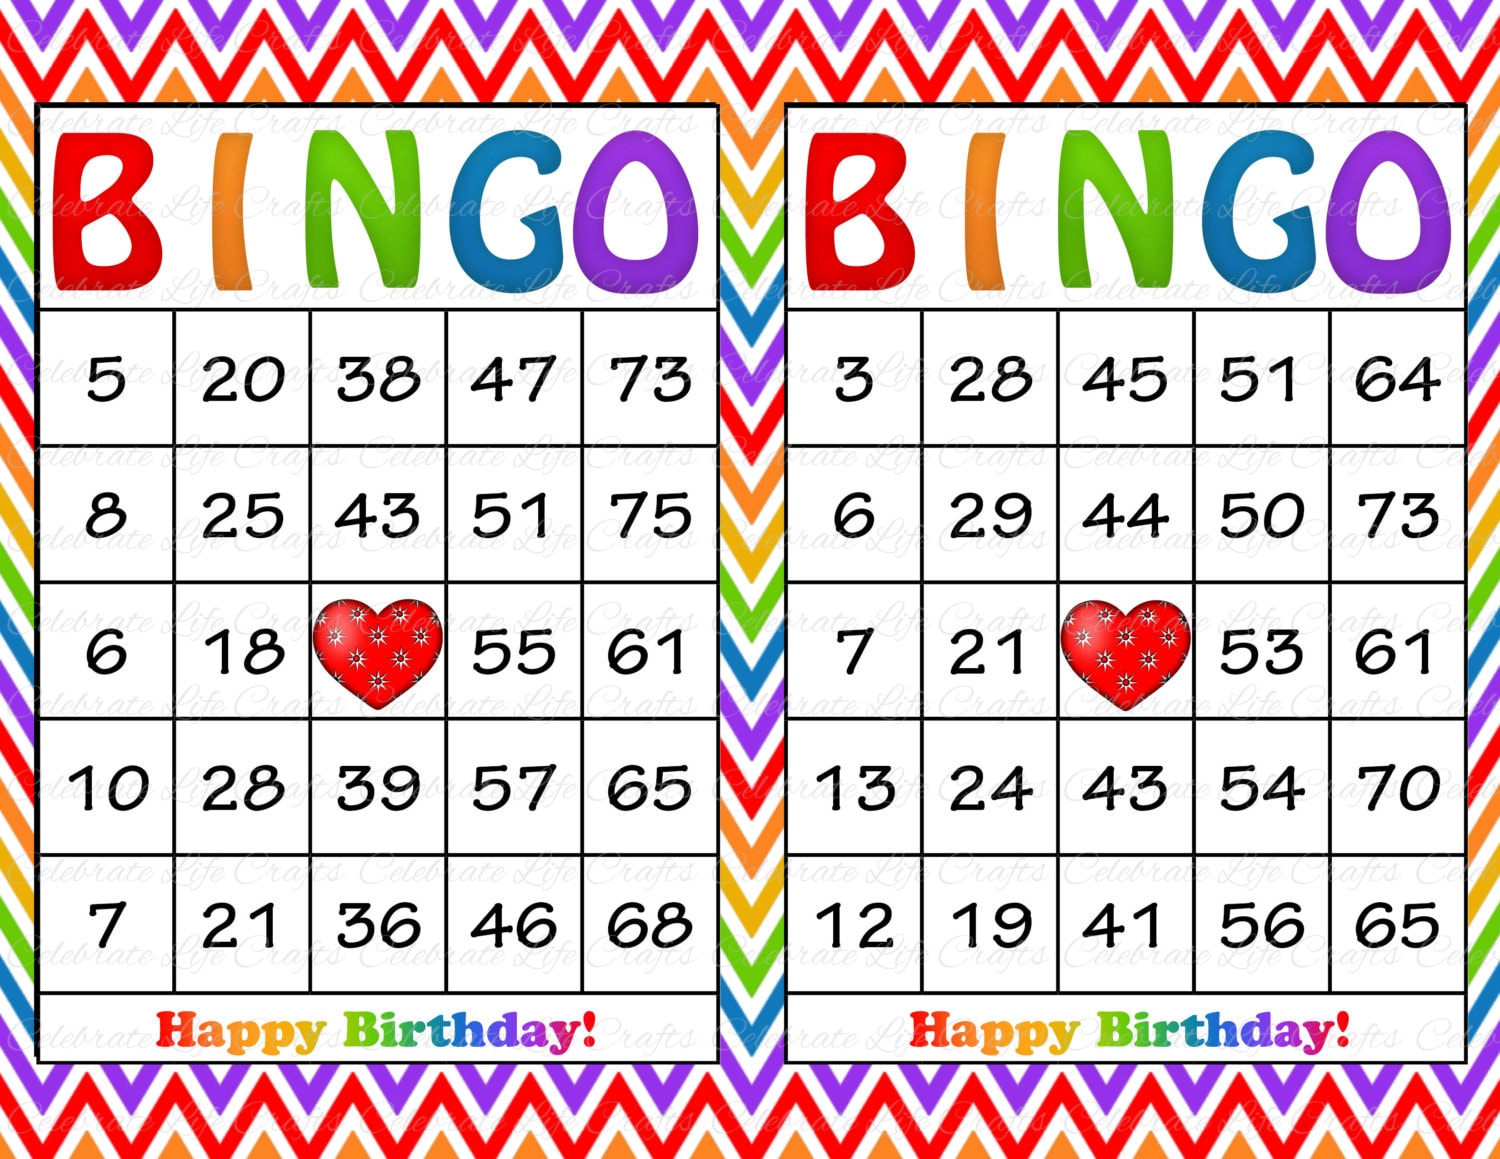 sight-words-bingo-cards